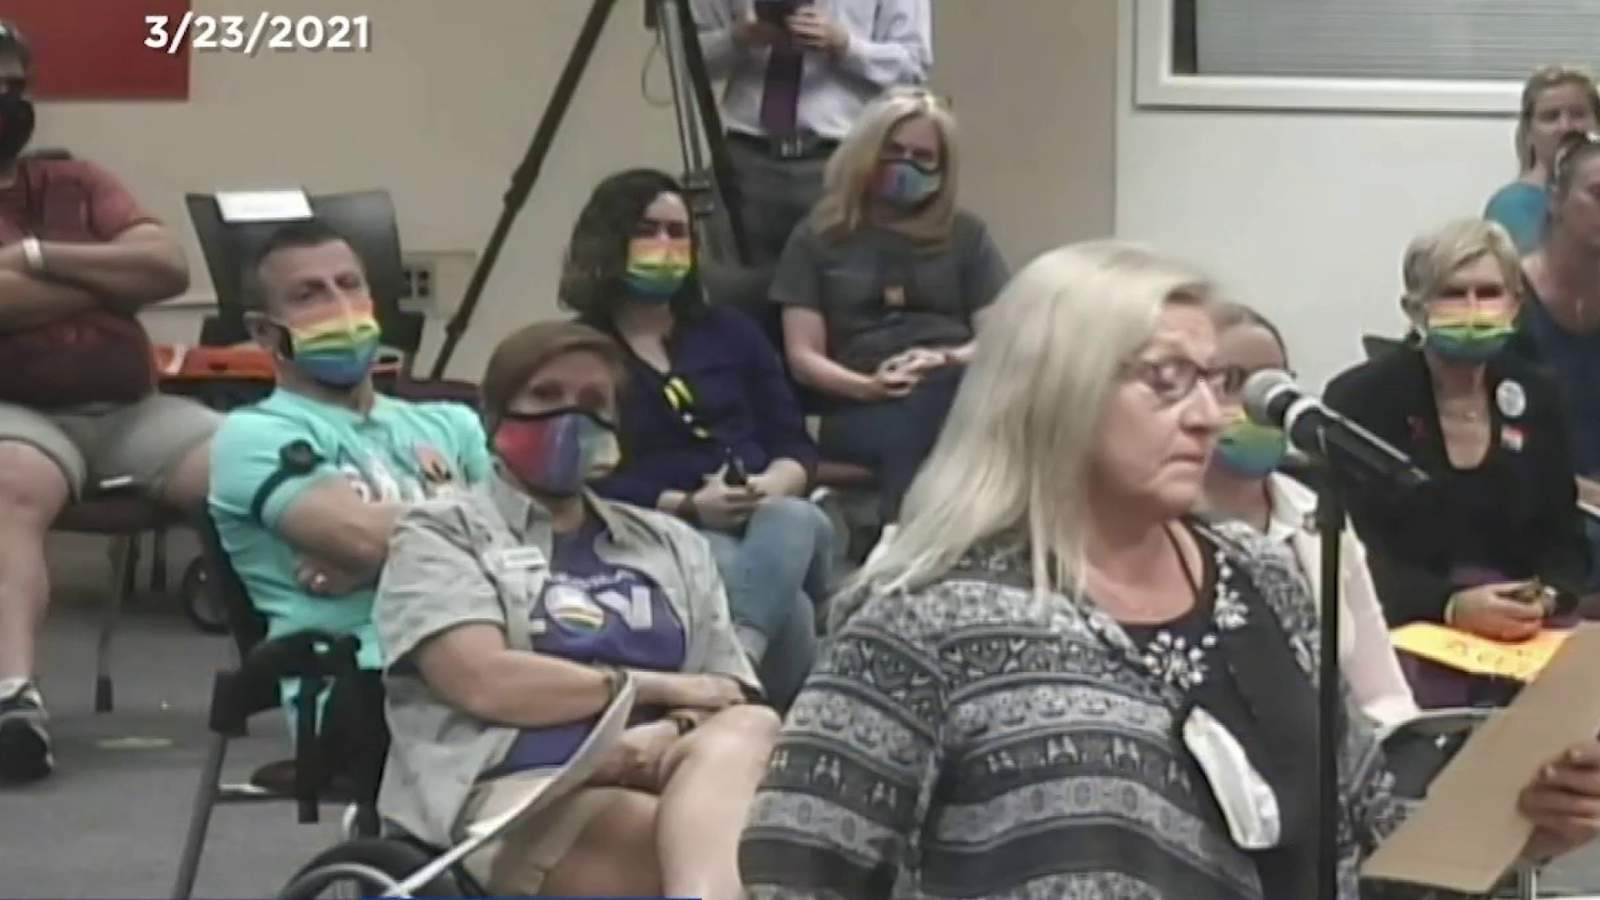 School board fires Florida teacher for medical marijuana use